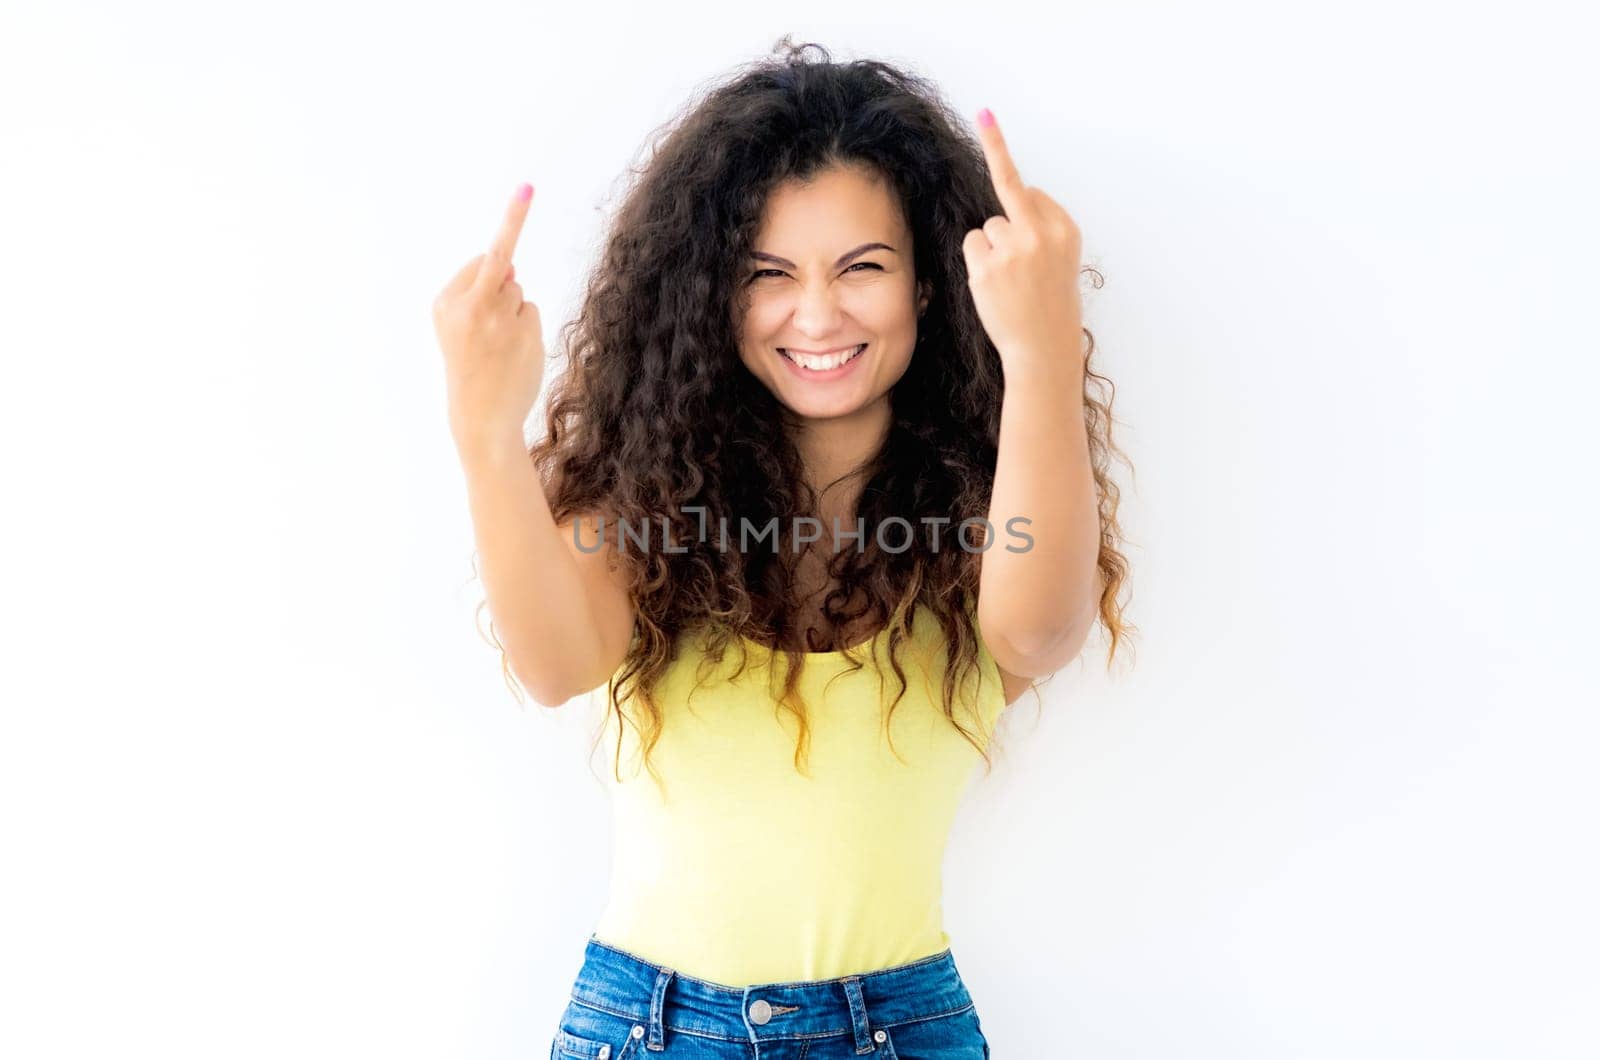 Girl showing middle fingers by GekaSkr